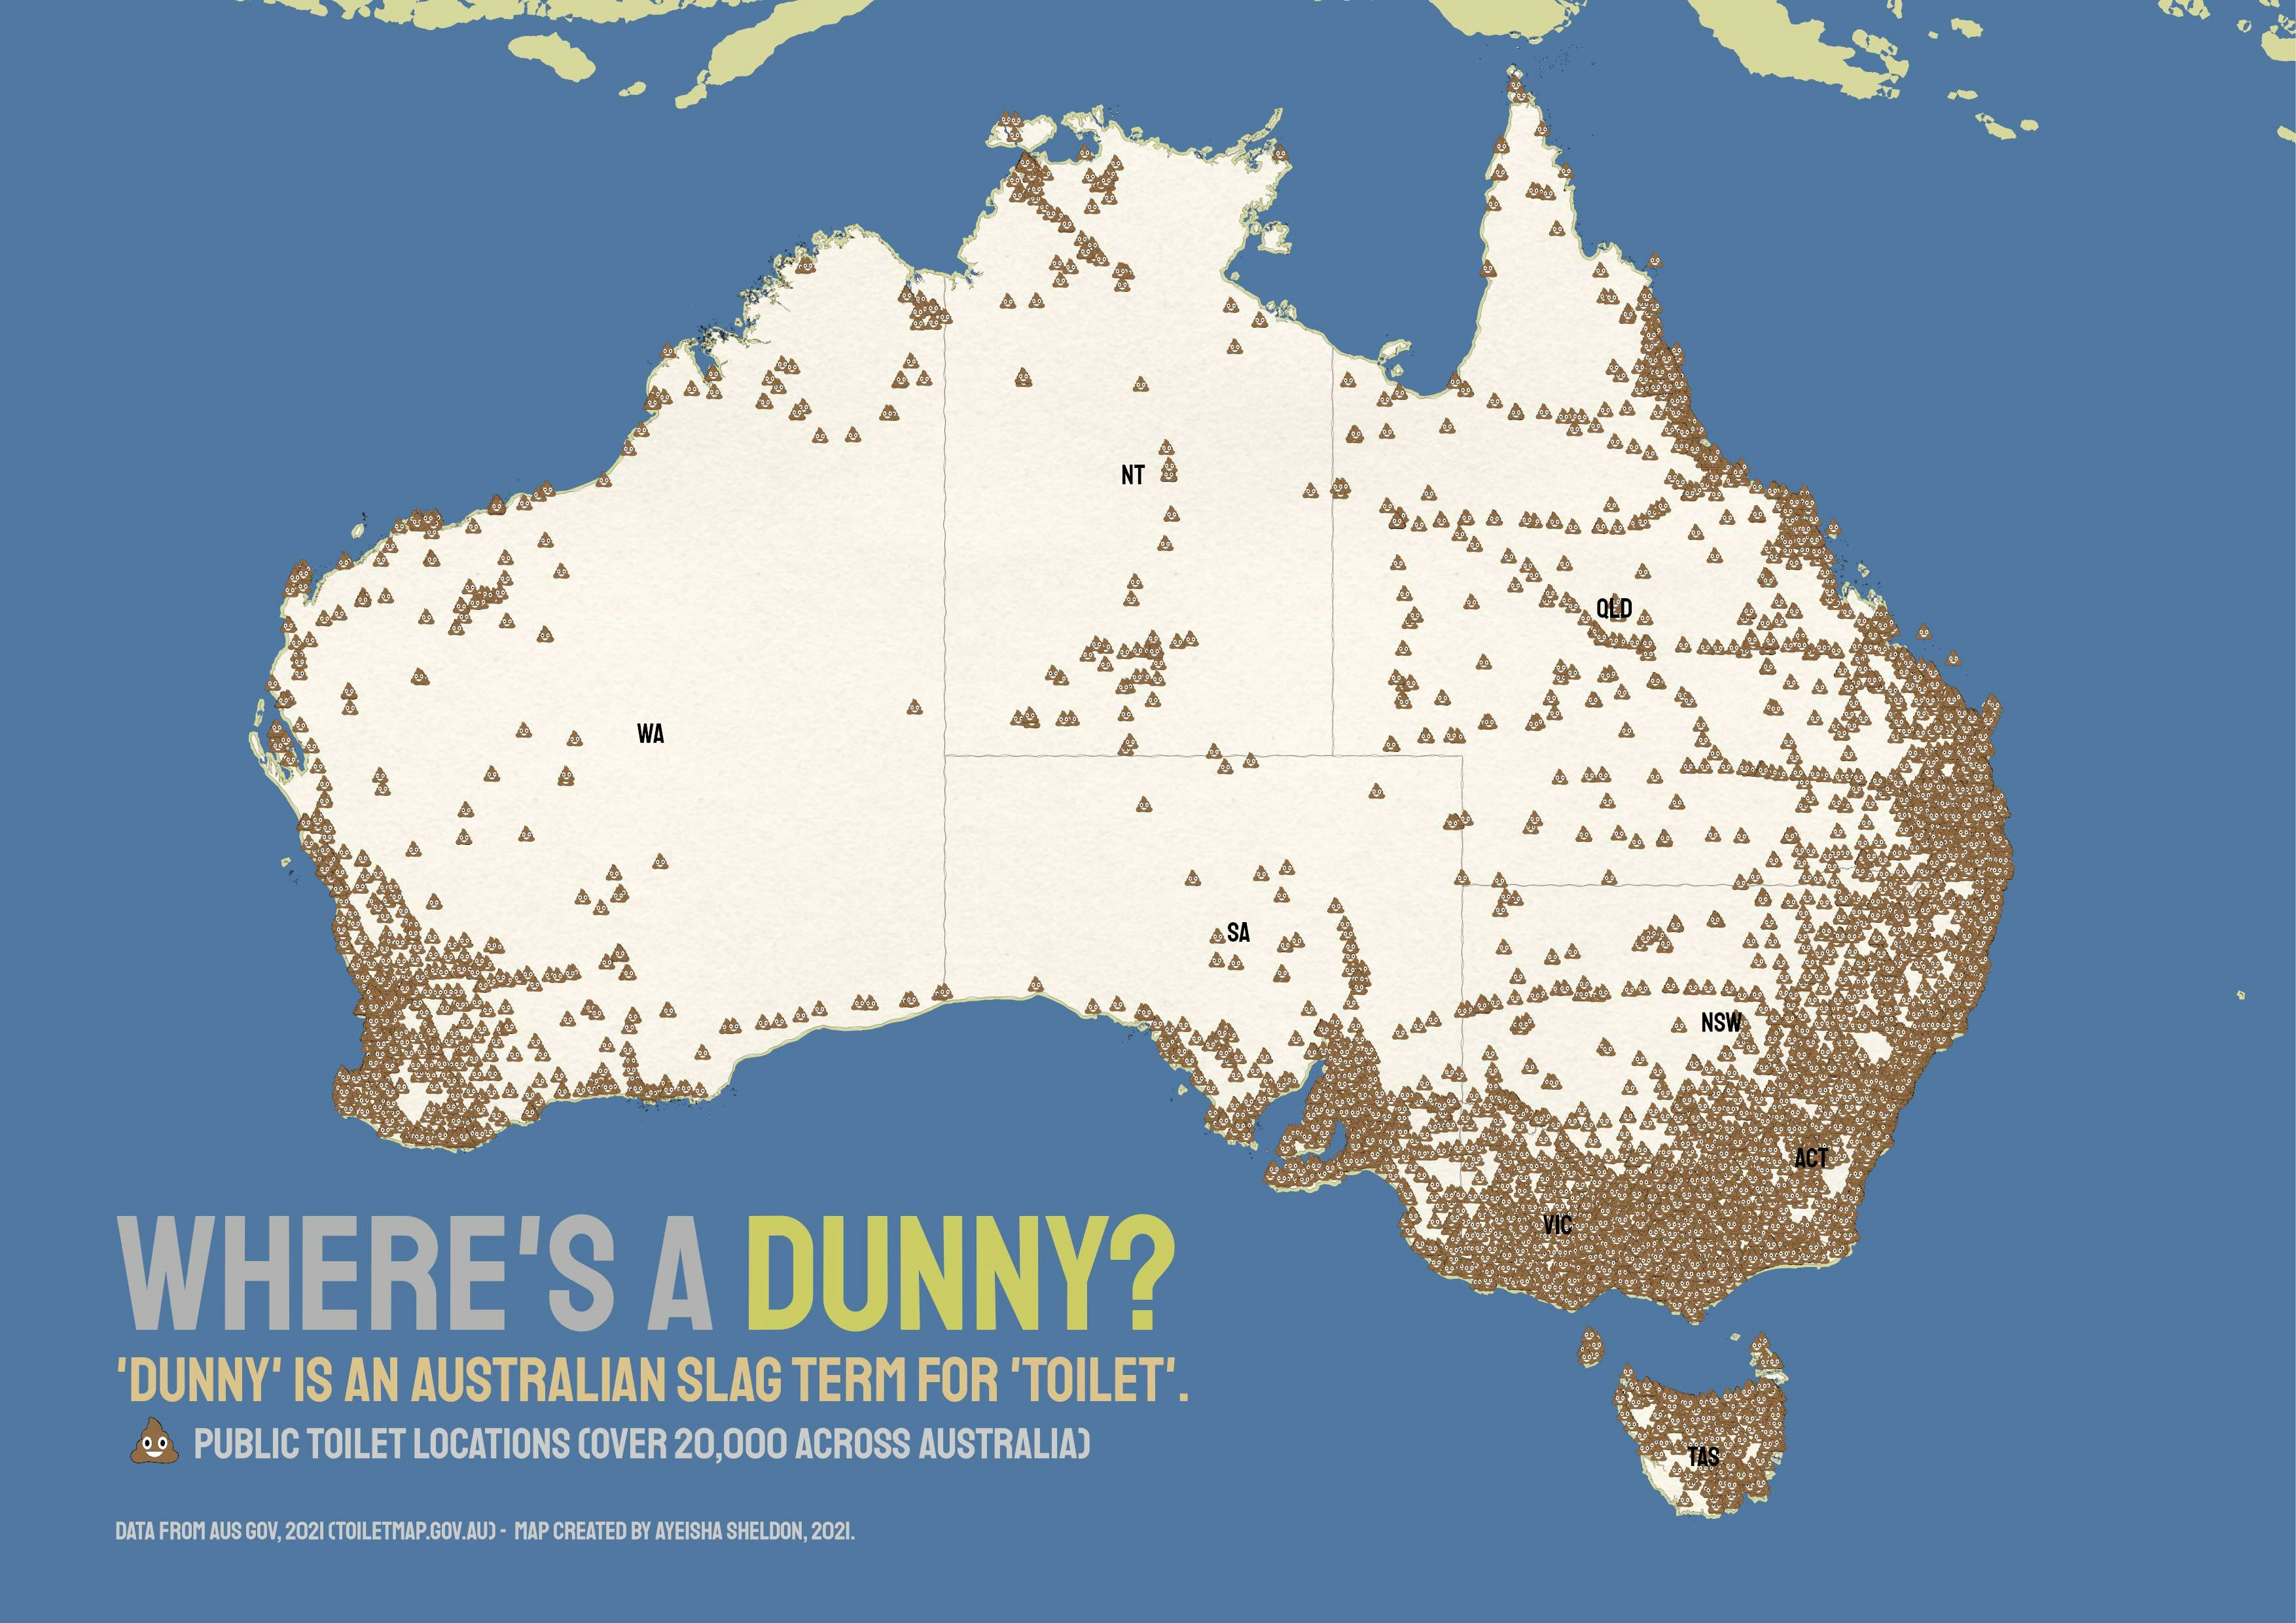 Where's a dunny down under? #Australia